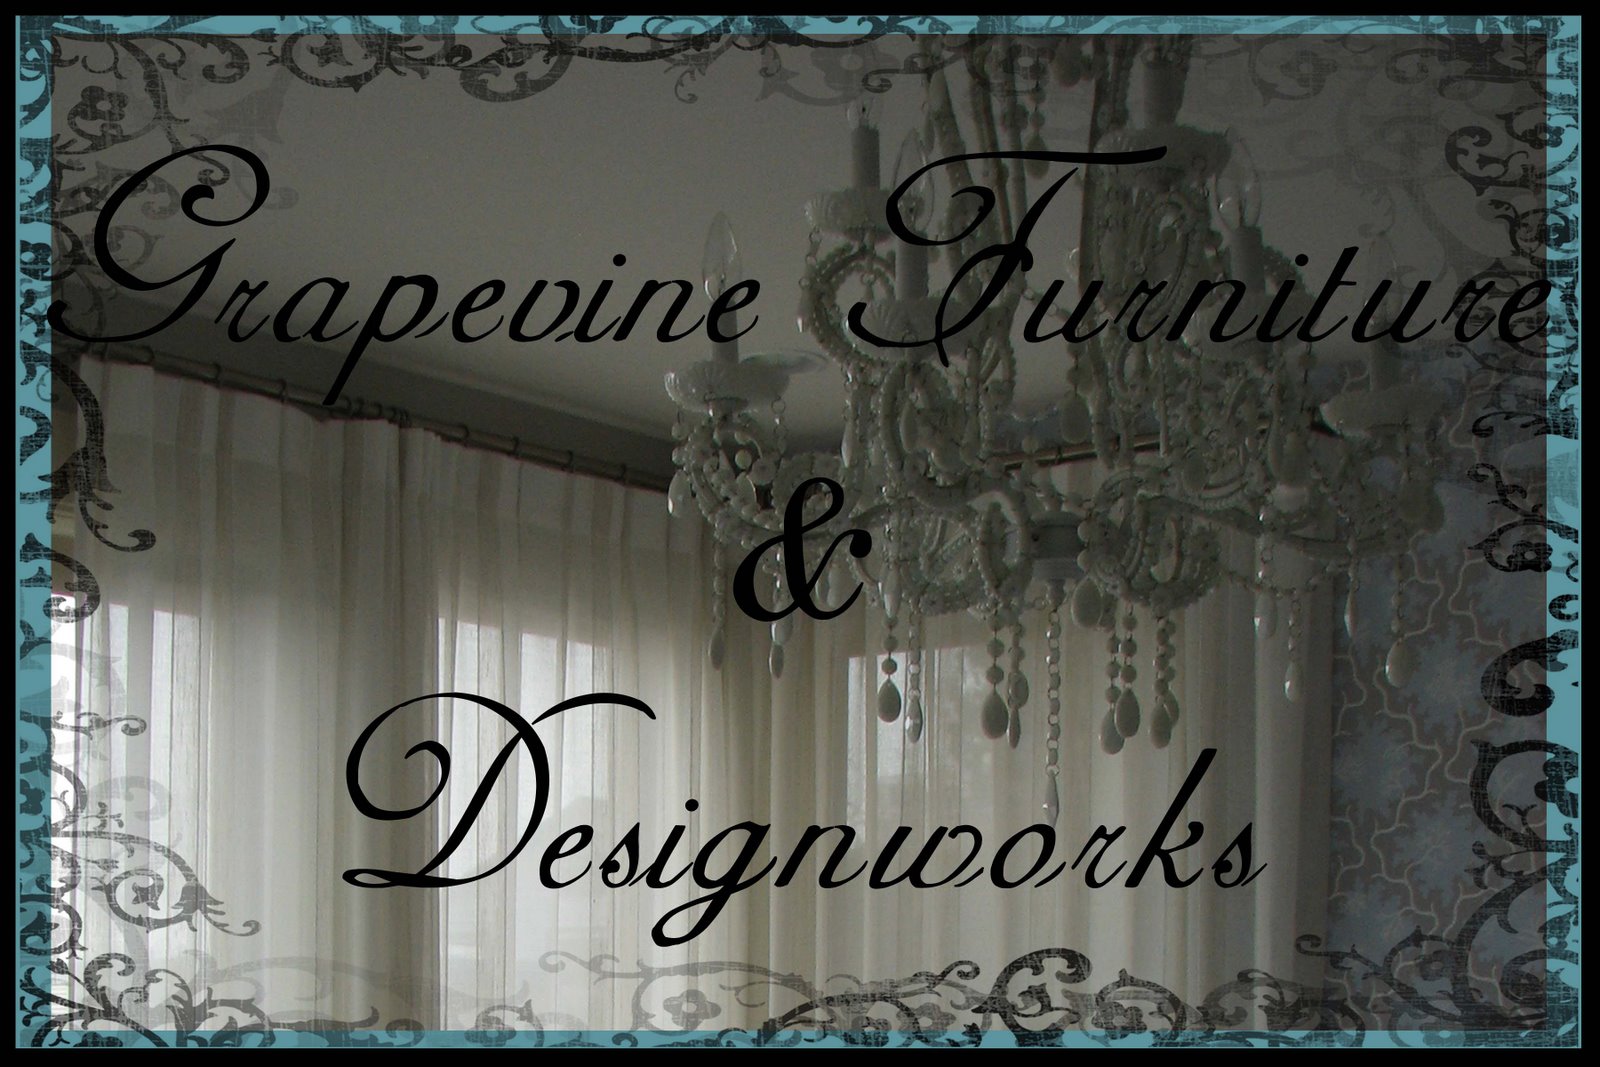 Grapevine Furniture & Designworks